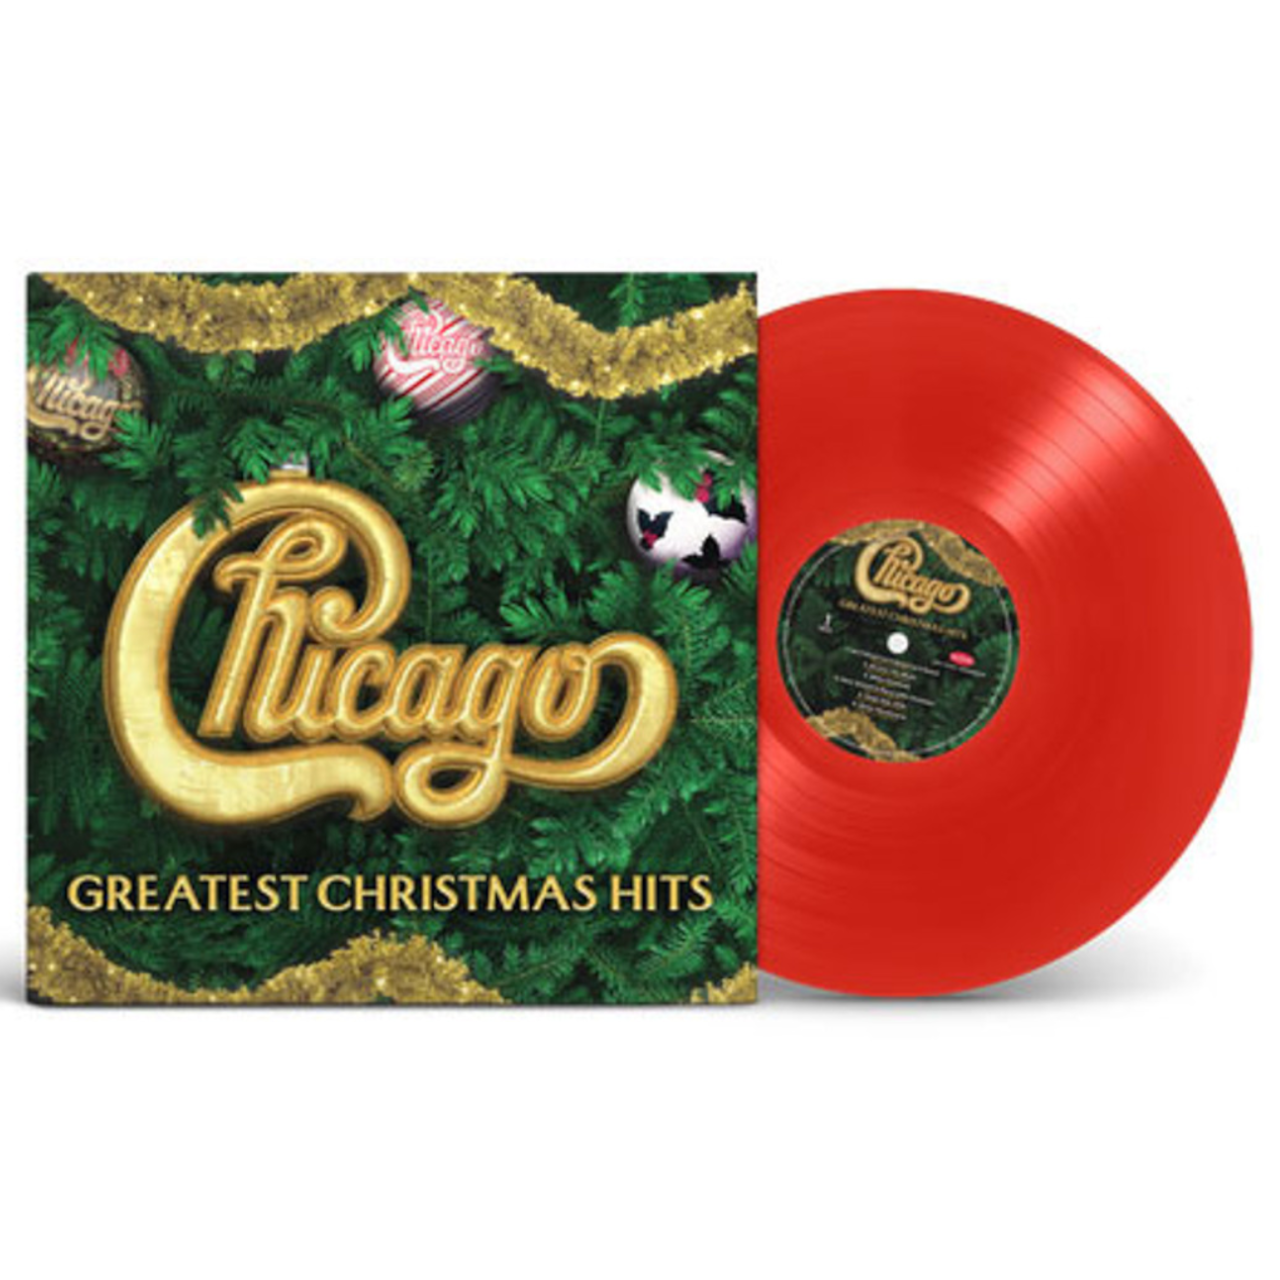 CHICAGO - Greatest Christmas Hits - LP - Red Vinyl [NOV 3]